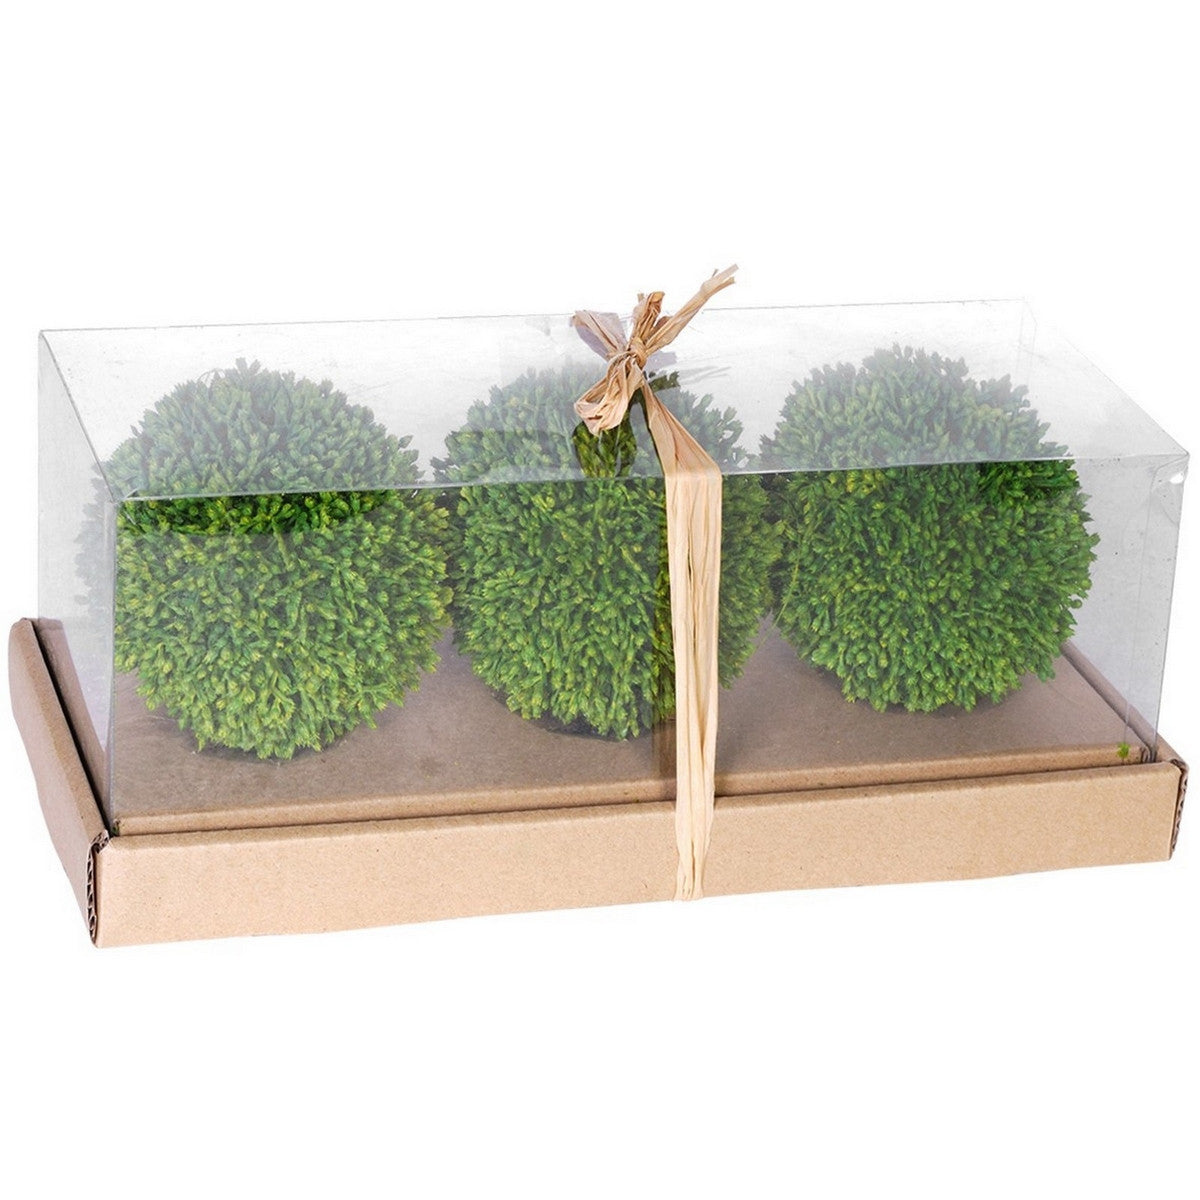 Artificial Topiary/Grass Balls In A Box - 3 pcs